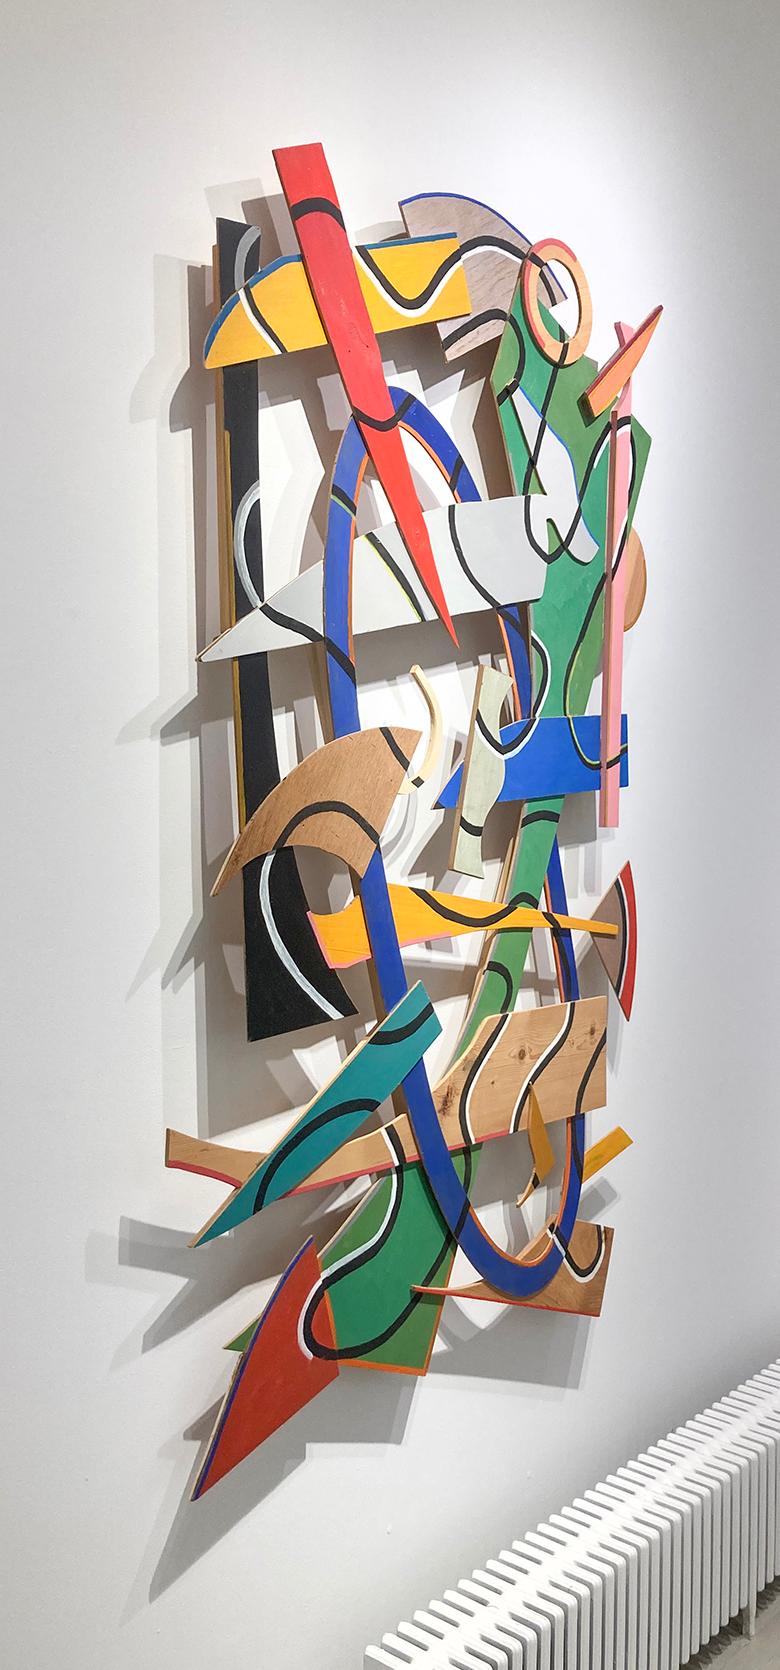 Ultramarin Oval (Farbene abstrakte dreidimensionale Holz-Wandskulptur)  (Abstrakt), Mixed Media Art, von Peter Hoffman